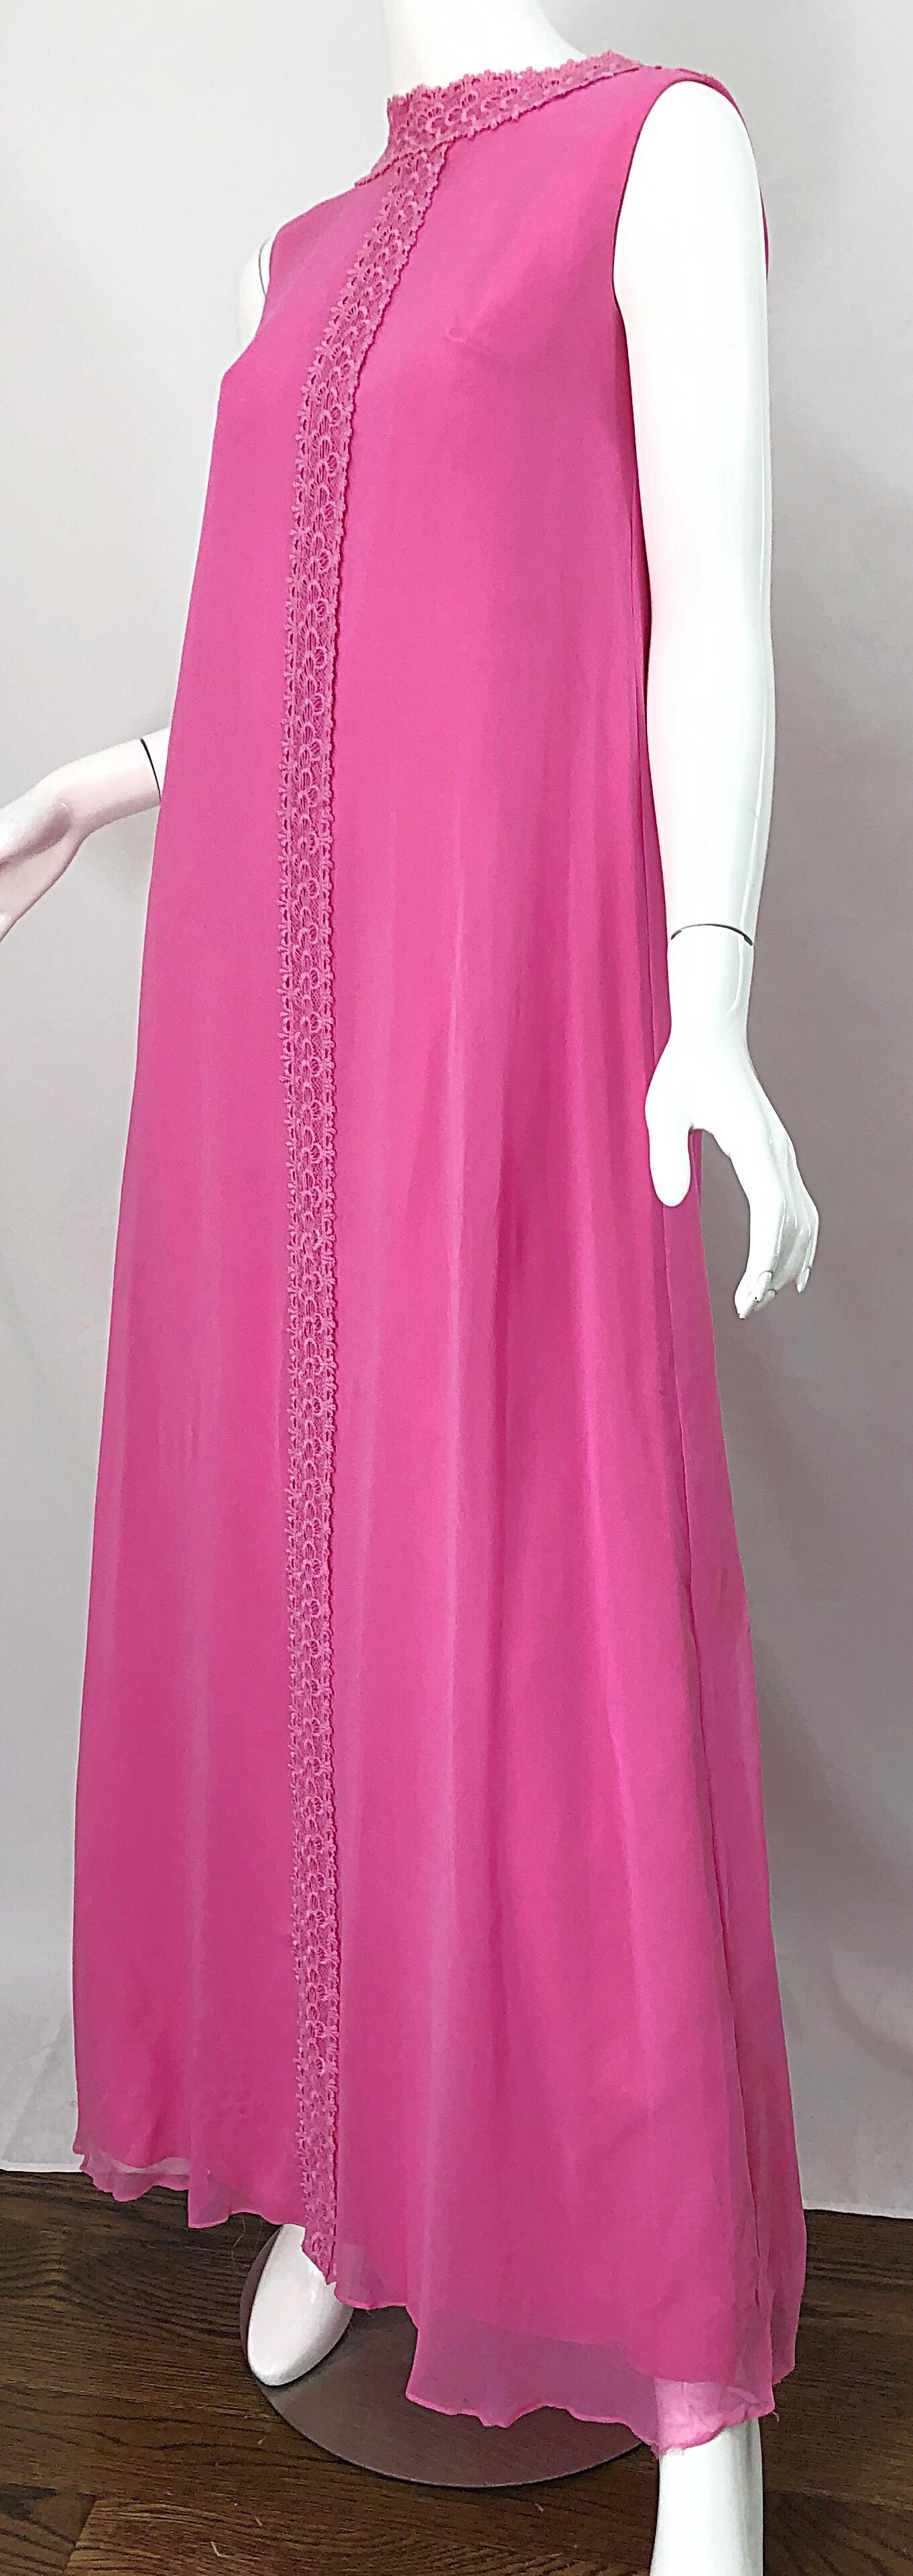 1960s Bubblegum Pink Silk Chiffon High Neck Demi Couture Vintage 60s Gown Dress For Sale 5